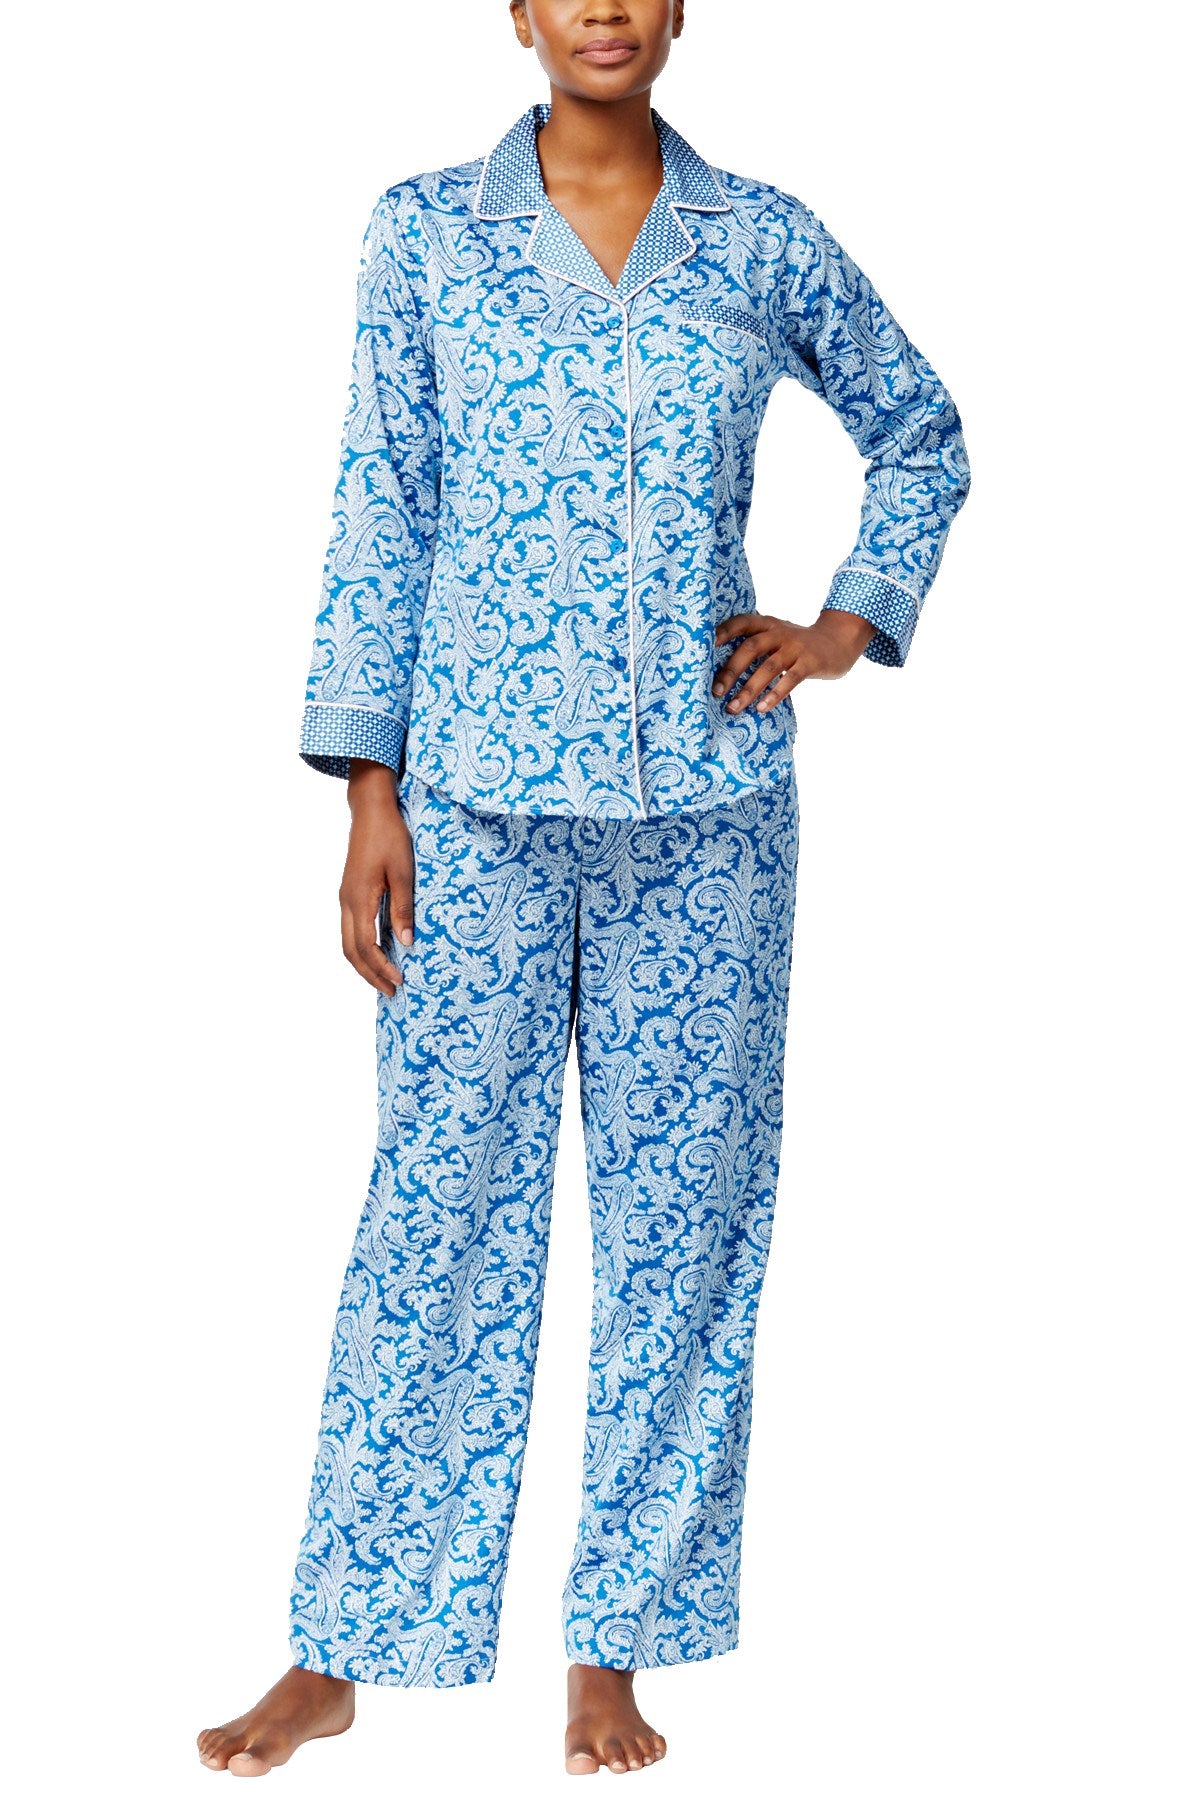 Miss Elaine Blue/White Paisley/Foulard Printed Satin Pajama Set